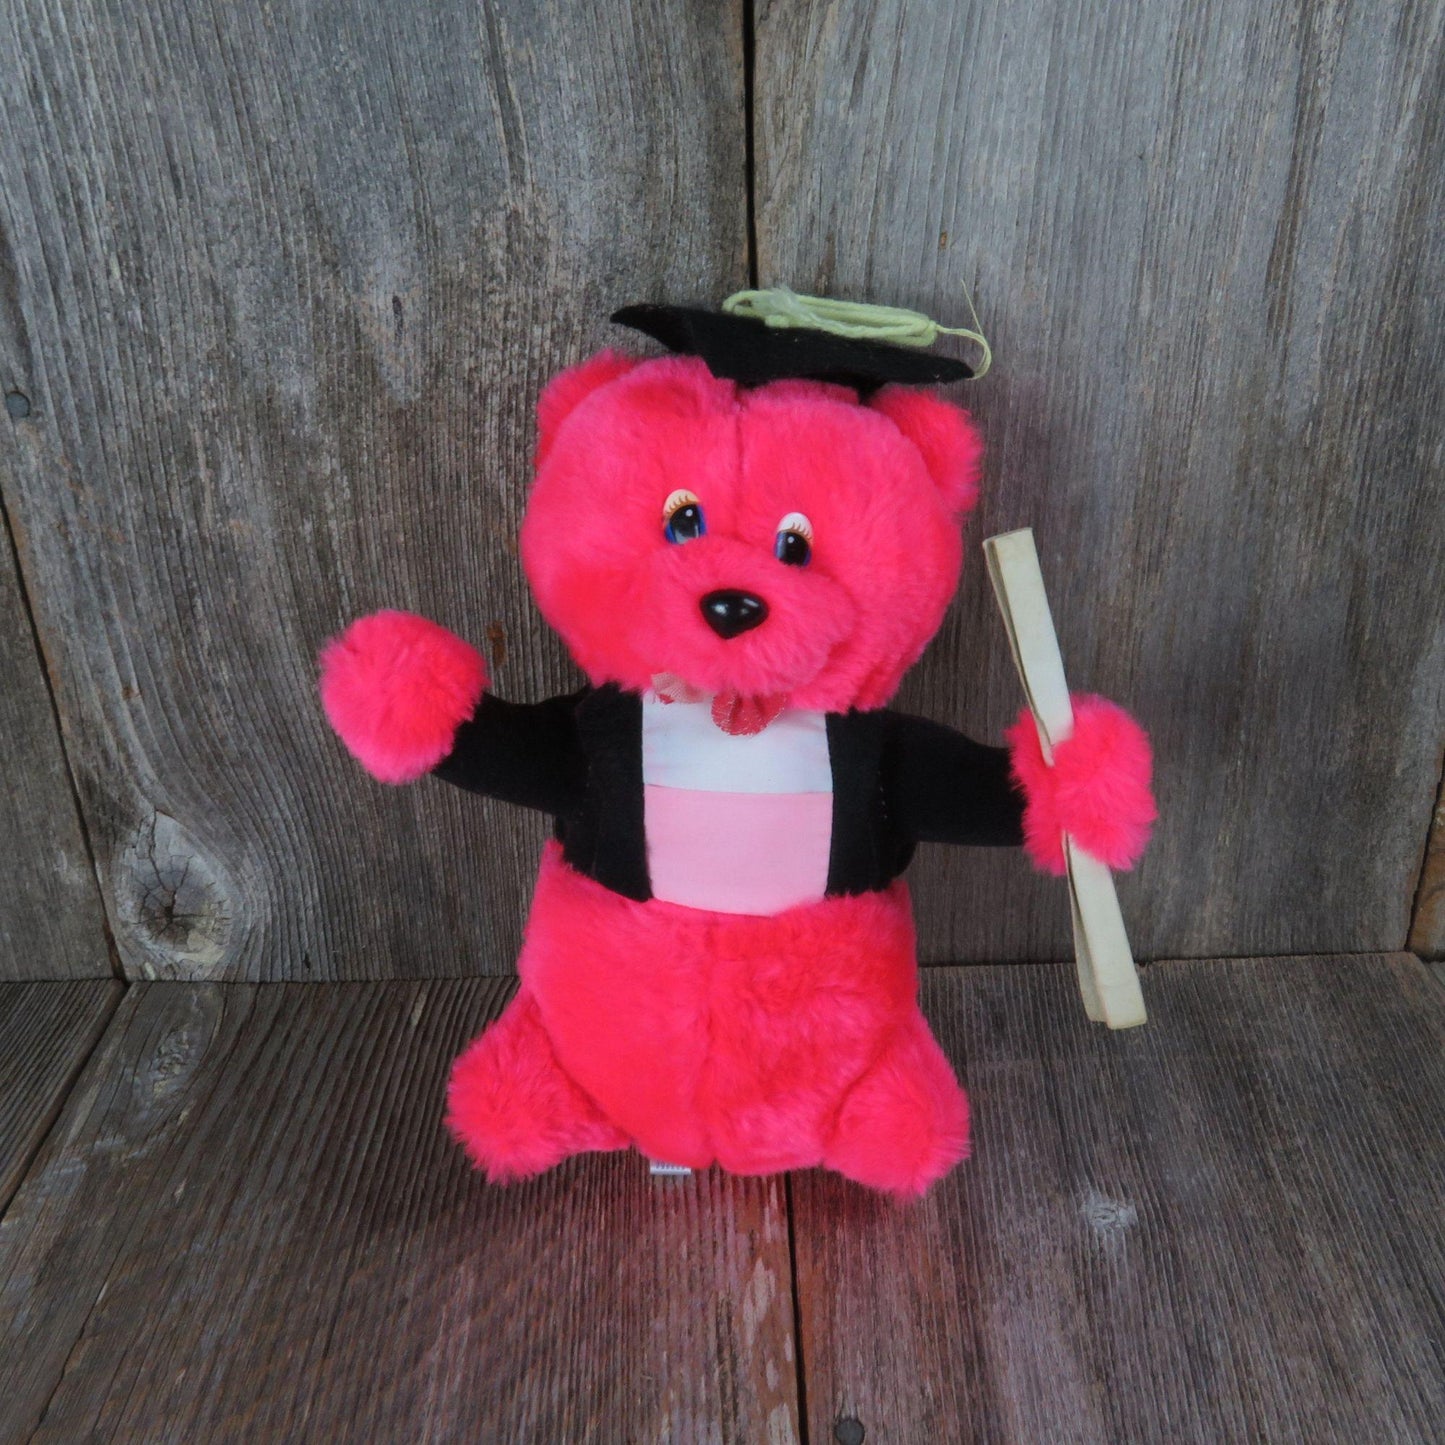 Vintage Red Bear Plush Graduation Graduate Hot Pink Stuffed Animal Pachinko Palace Diploma